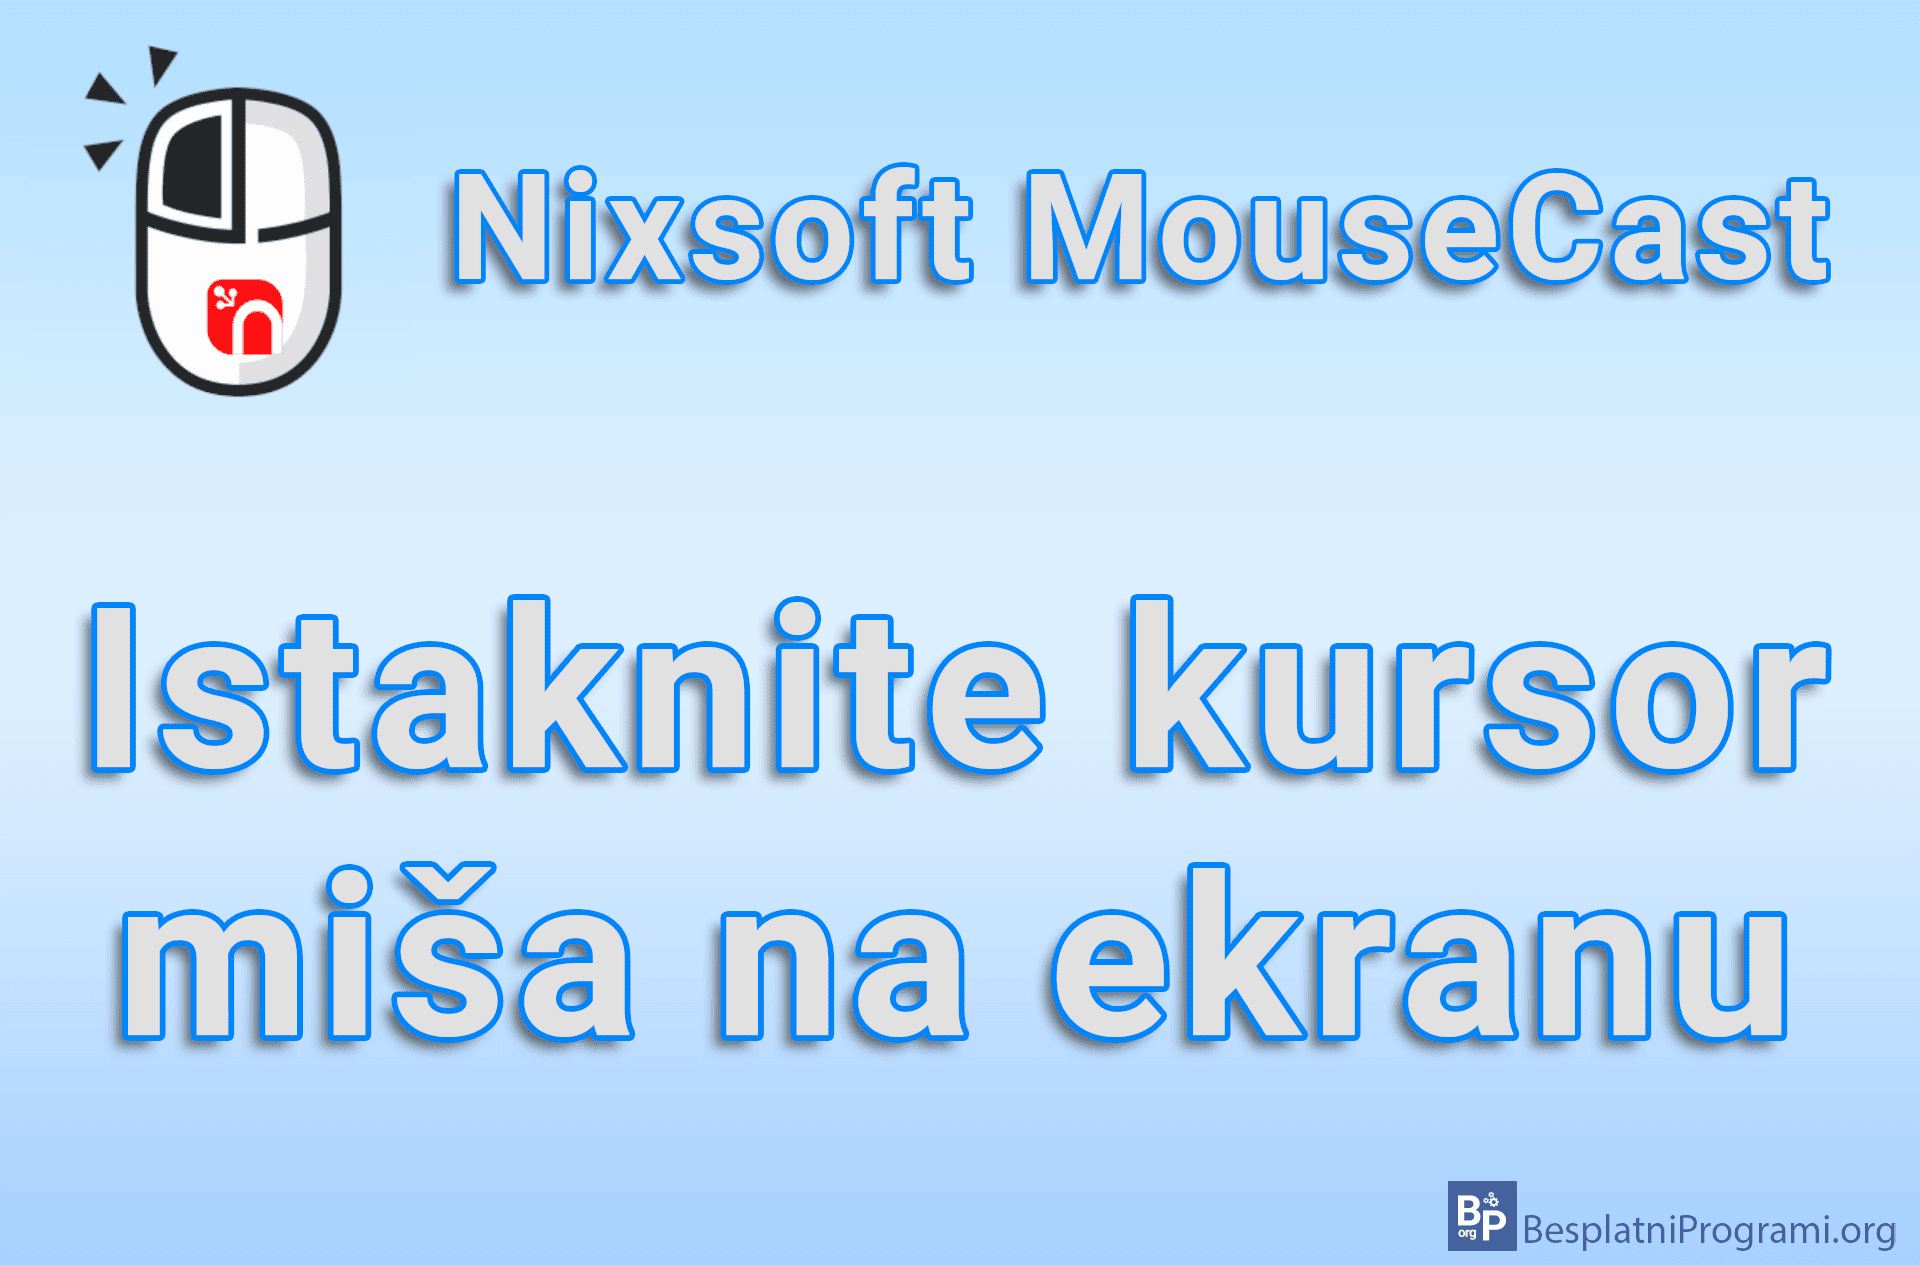 Nixsoft MouseCast – Istaknite kursor miša na ekranu